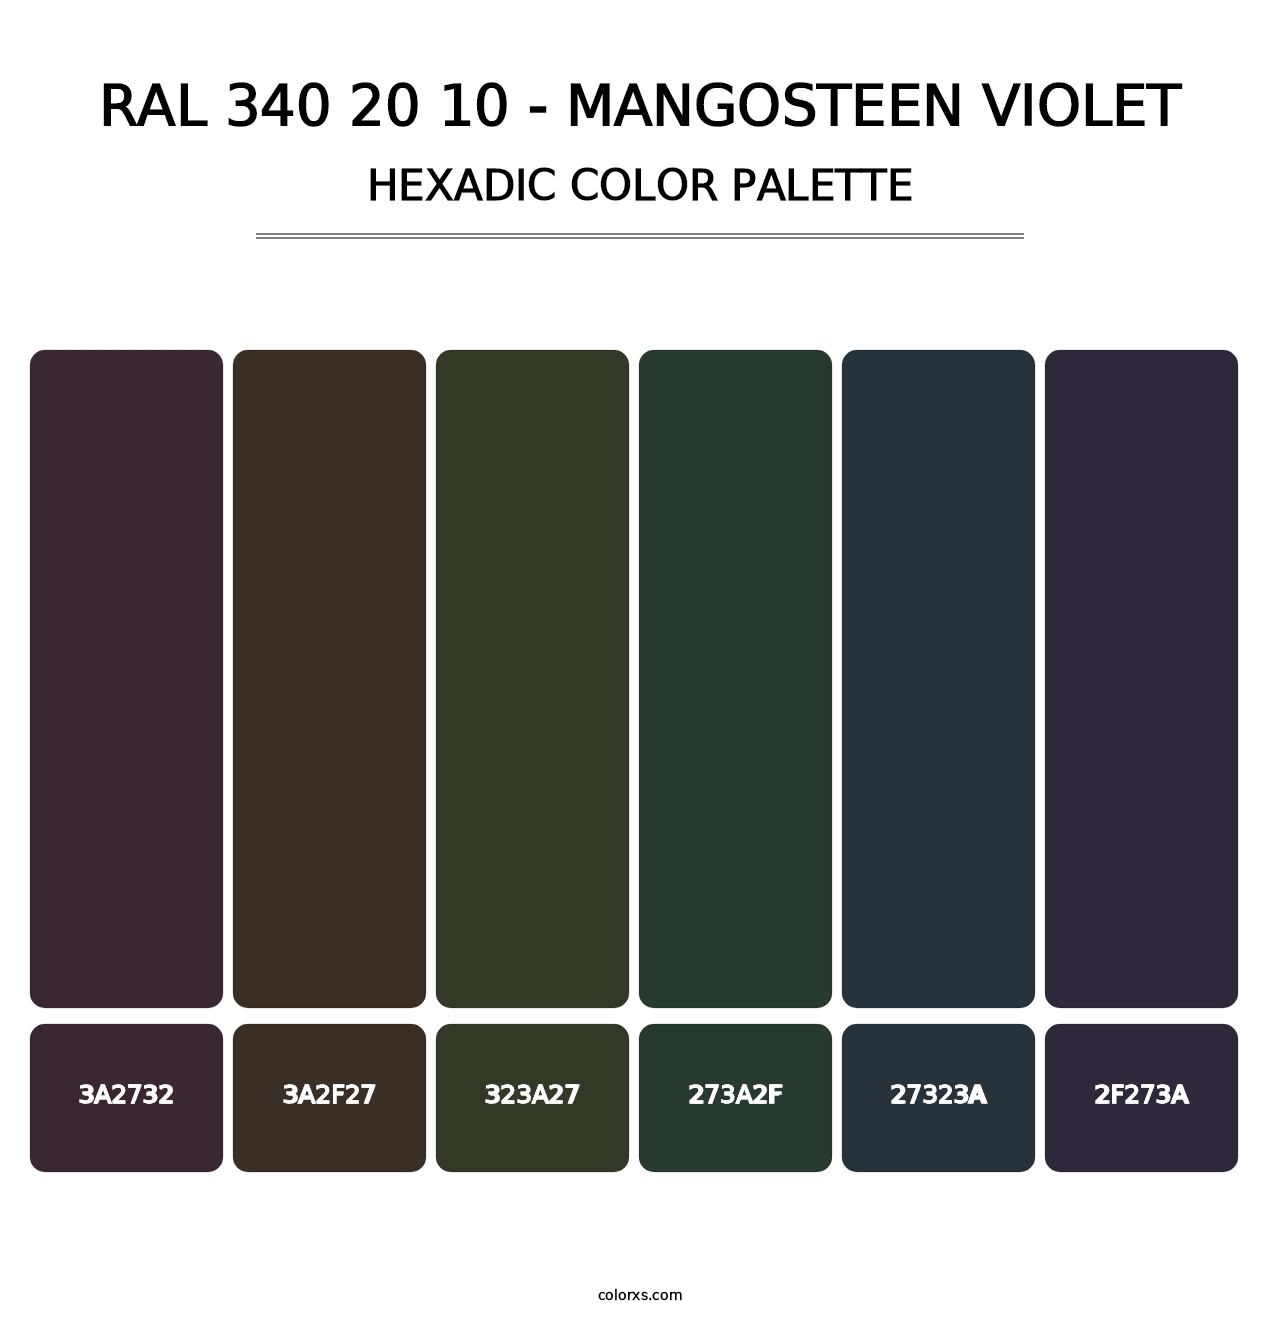 RAL 340 20 10 - Mangosteen Violet - Hexadic Color Palette